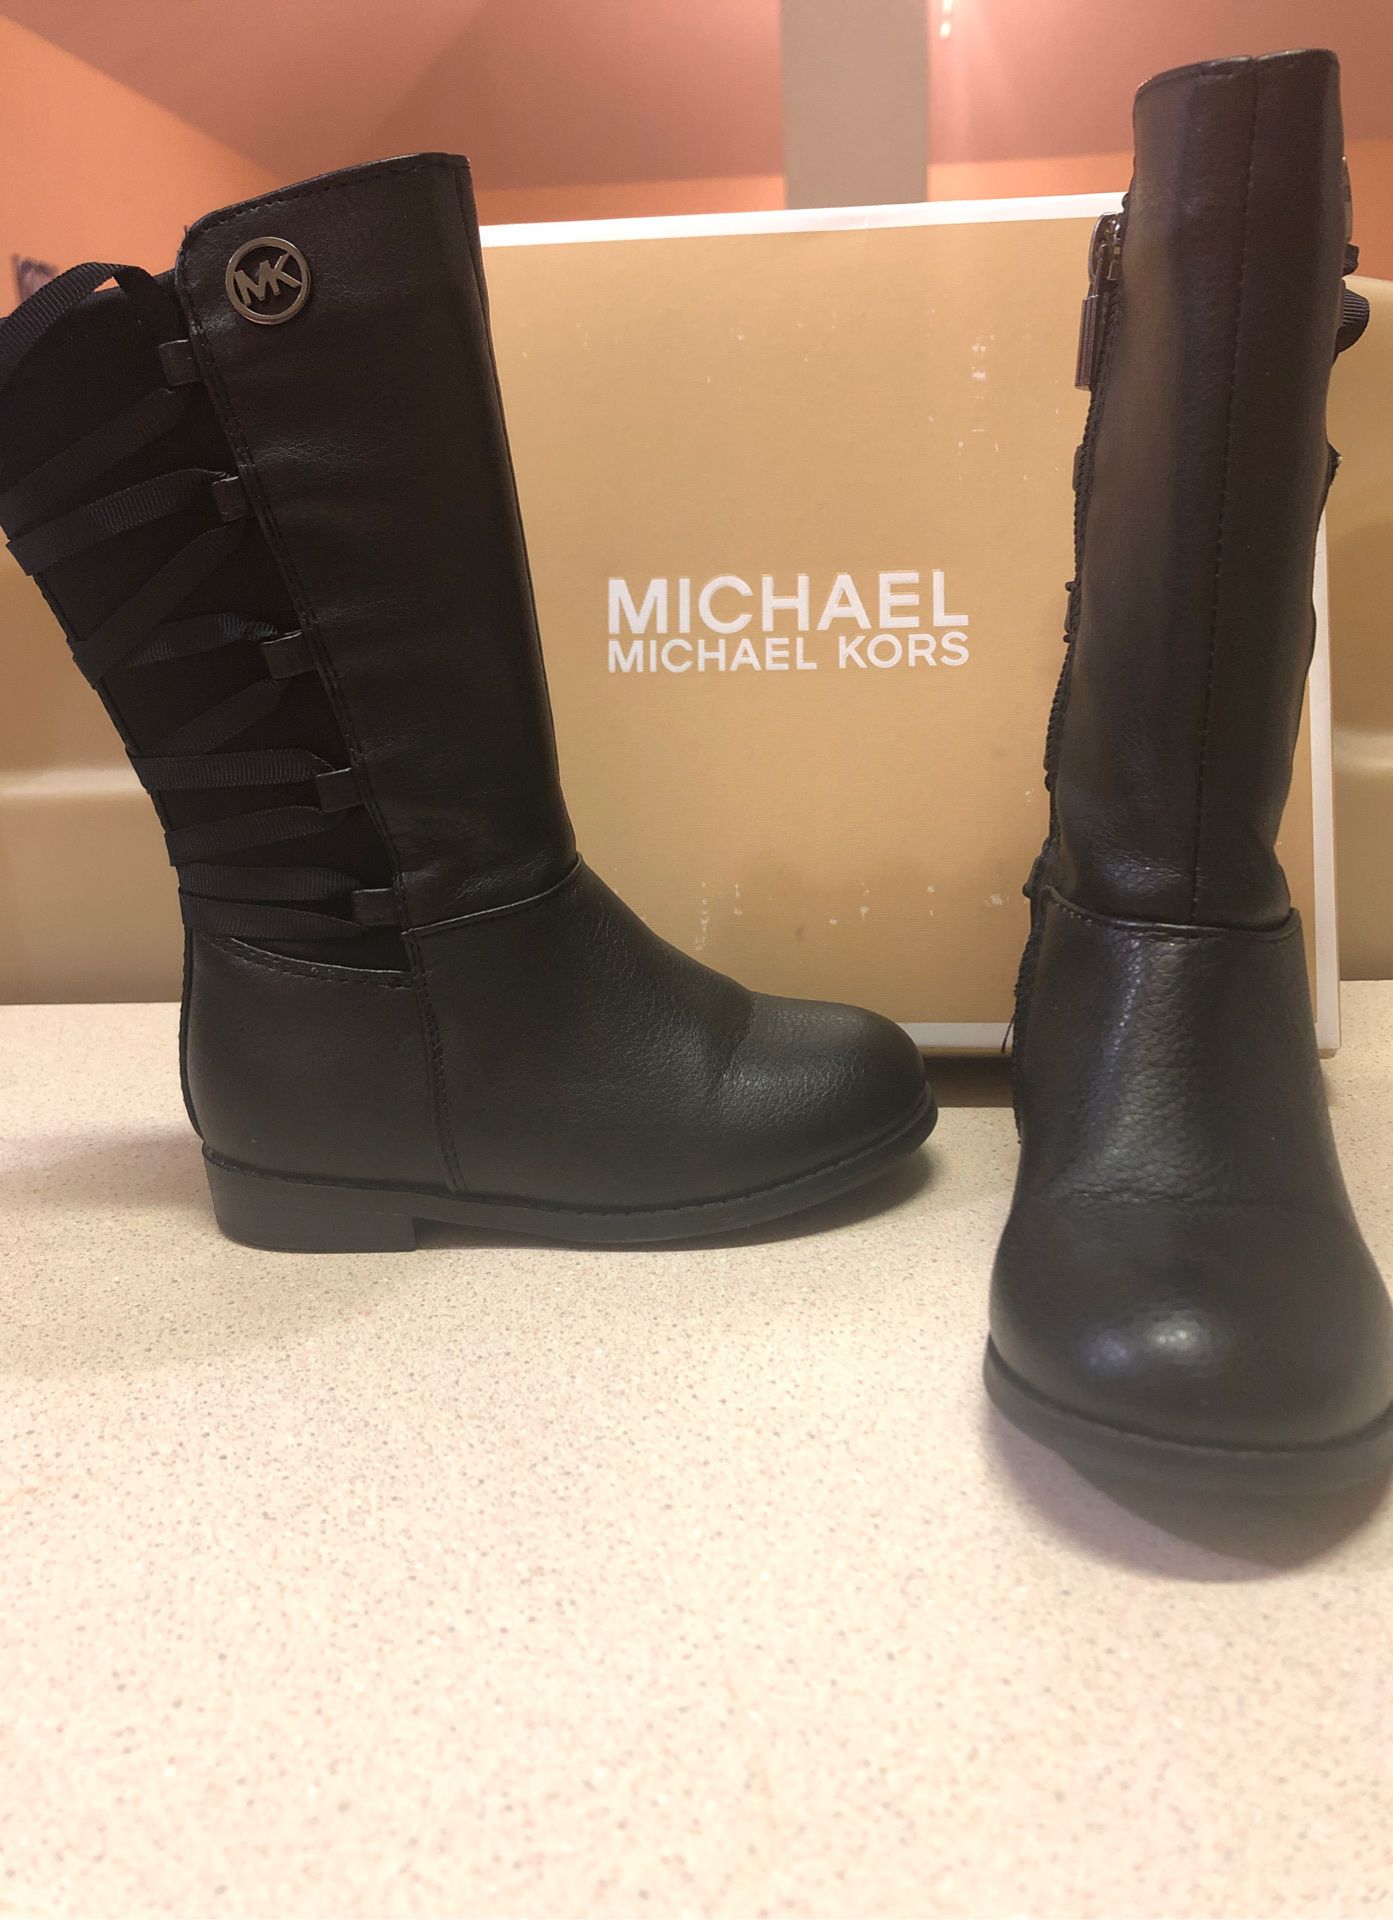 Micheal Kors Black Boot size 7 girls